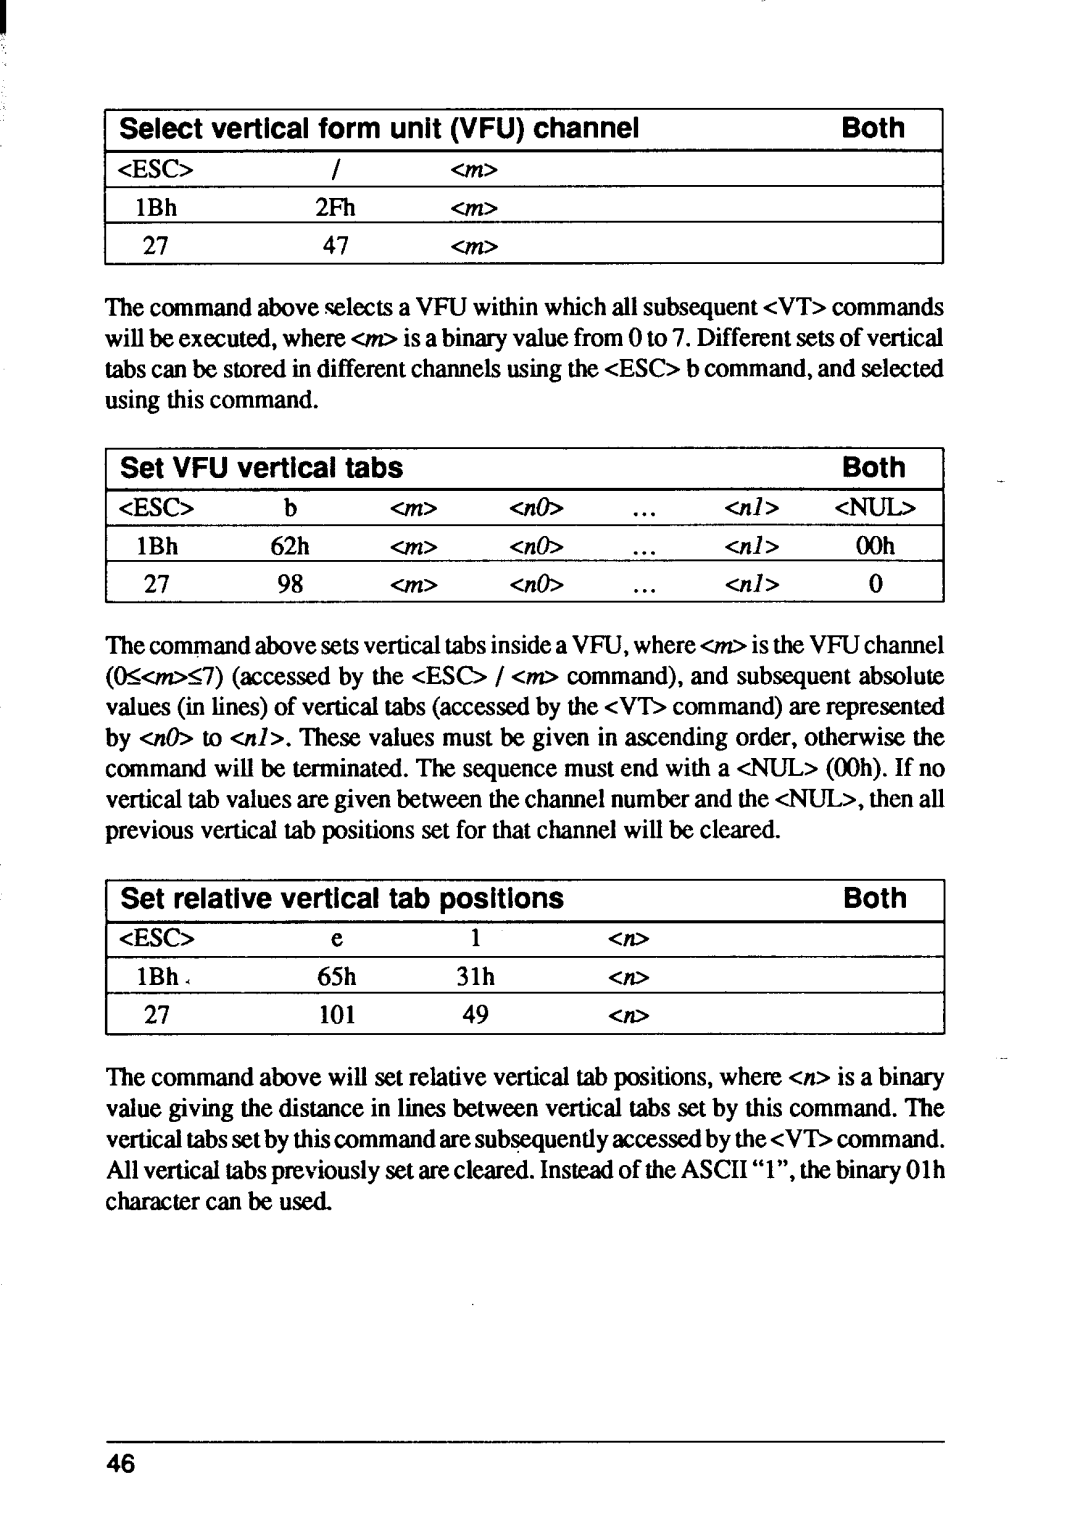 Star Micronics XB24-10, XB24-15 user manual 1Select vertical form unit VFU channel, Both, Set VFU vertical tabs 